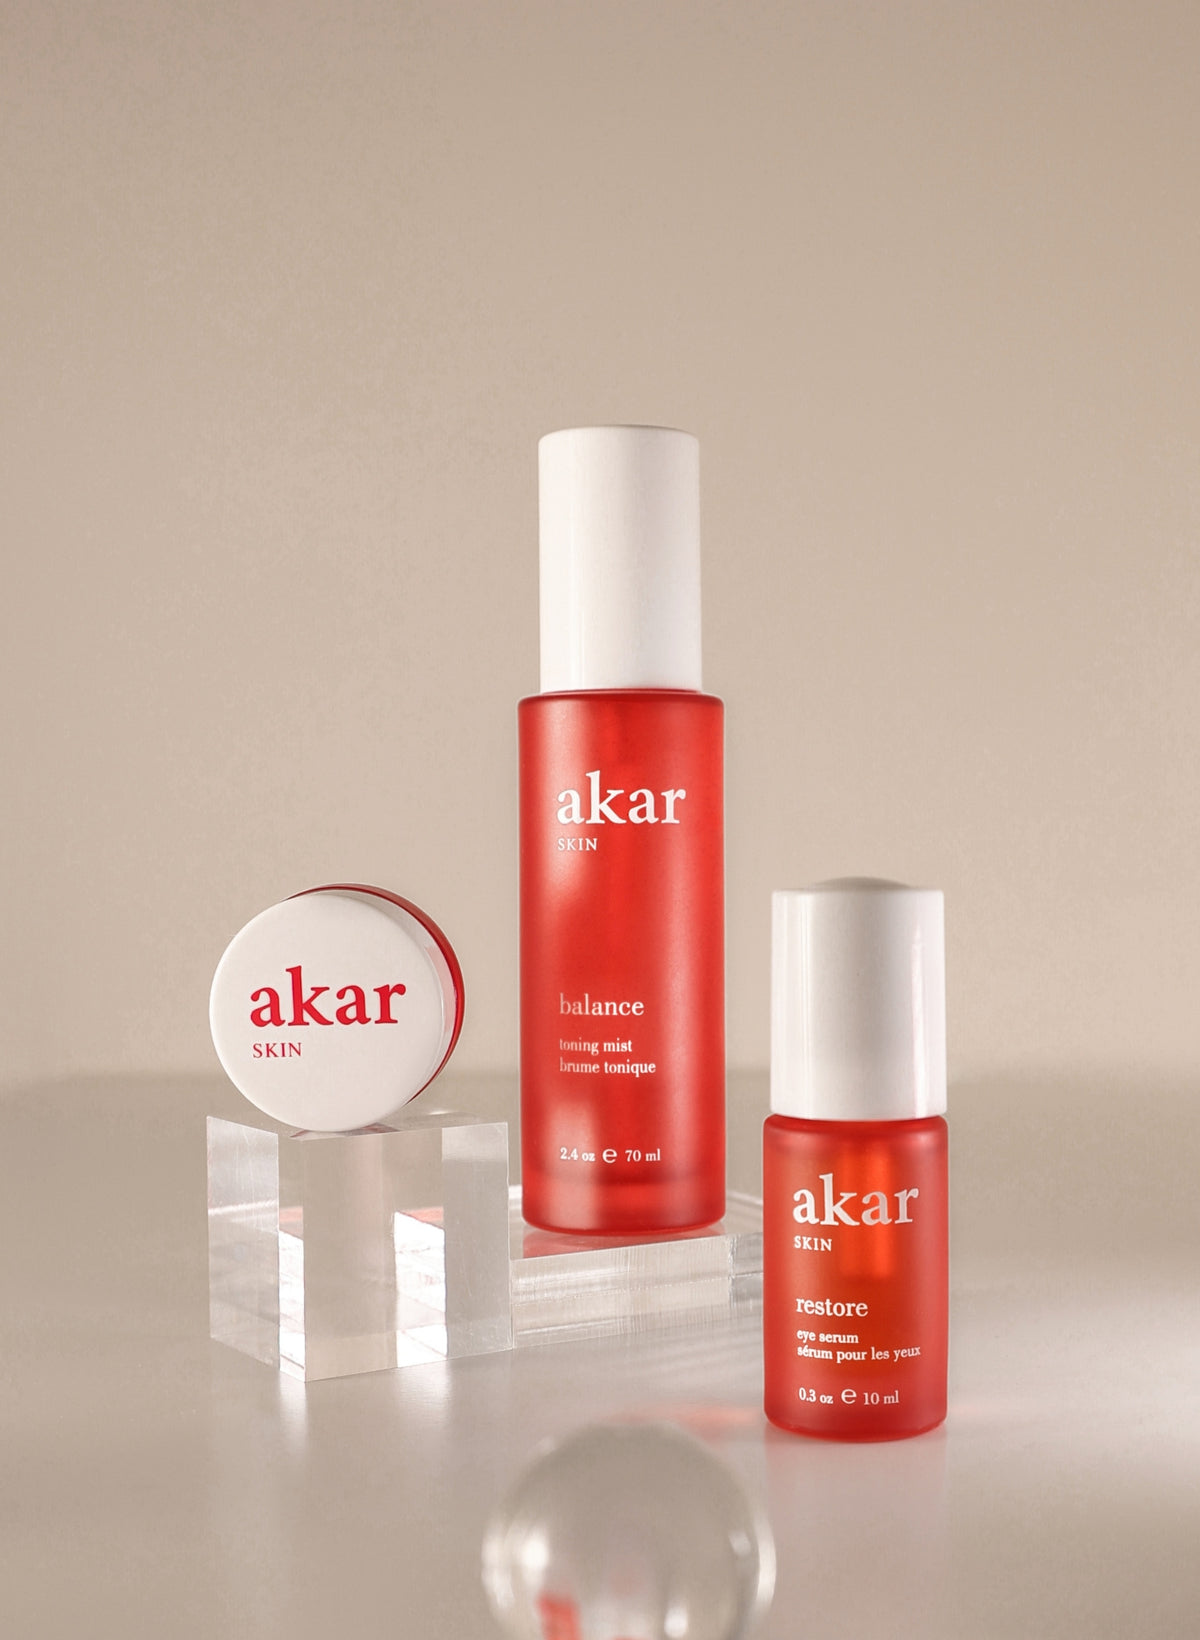 Akar Skin, Balance Toning Mist, Restore Eye Serum, Pure Lip Restoration, oily, bundle, discount, set, clean beauty